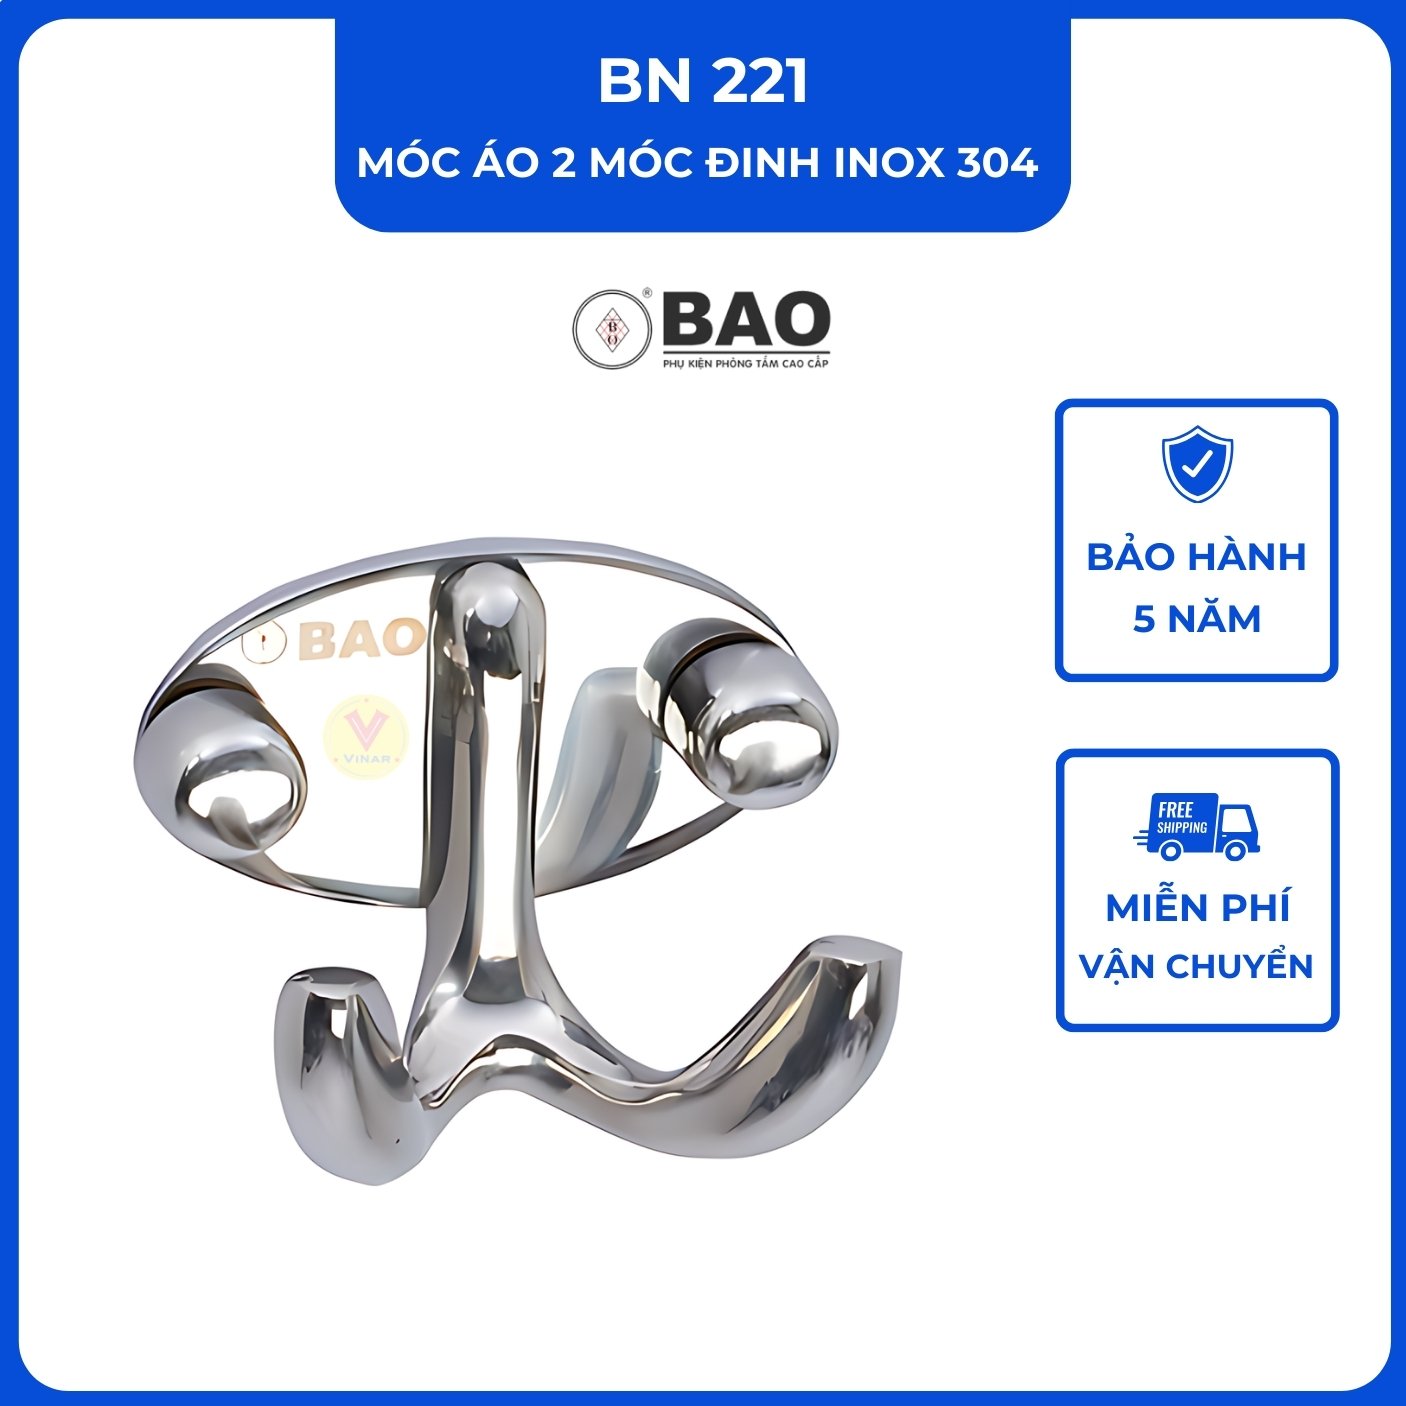 moc-ao-2-moc-dinh-inox-304-BN221